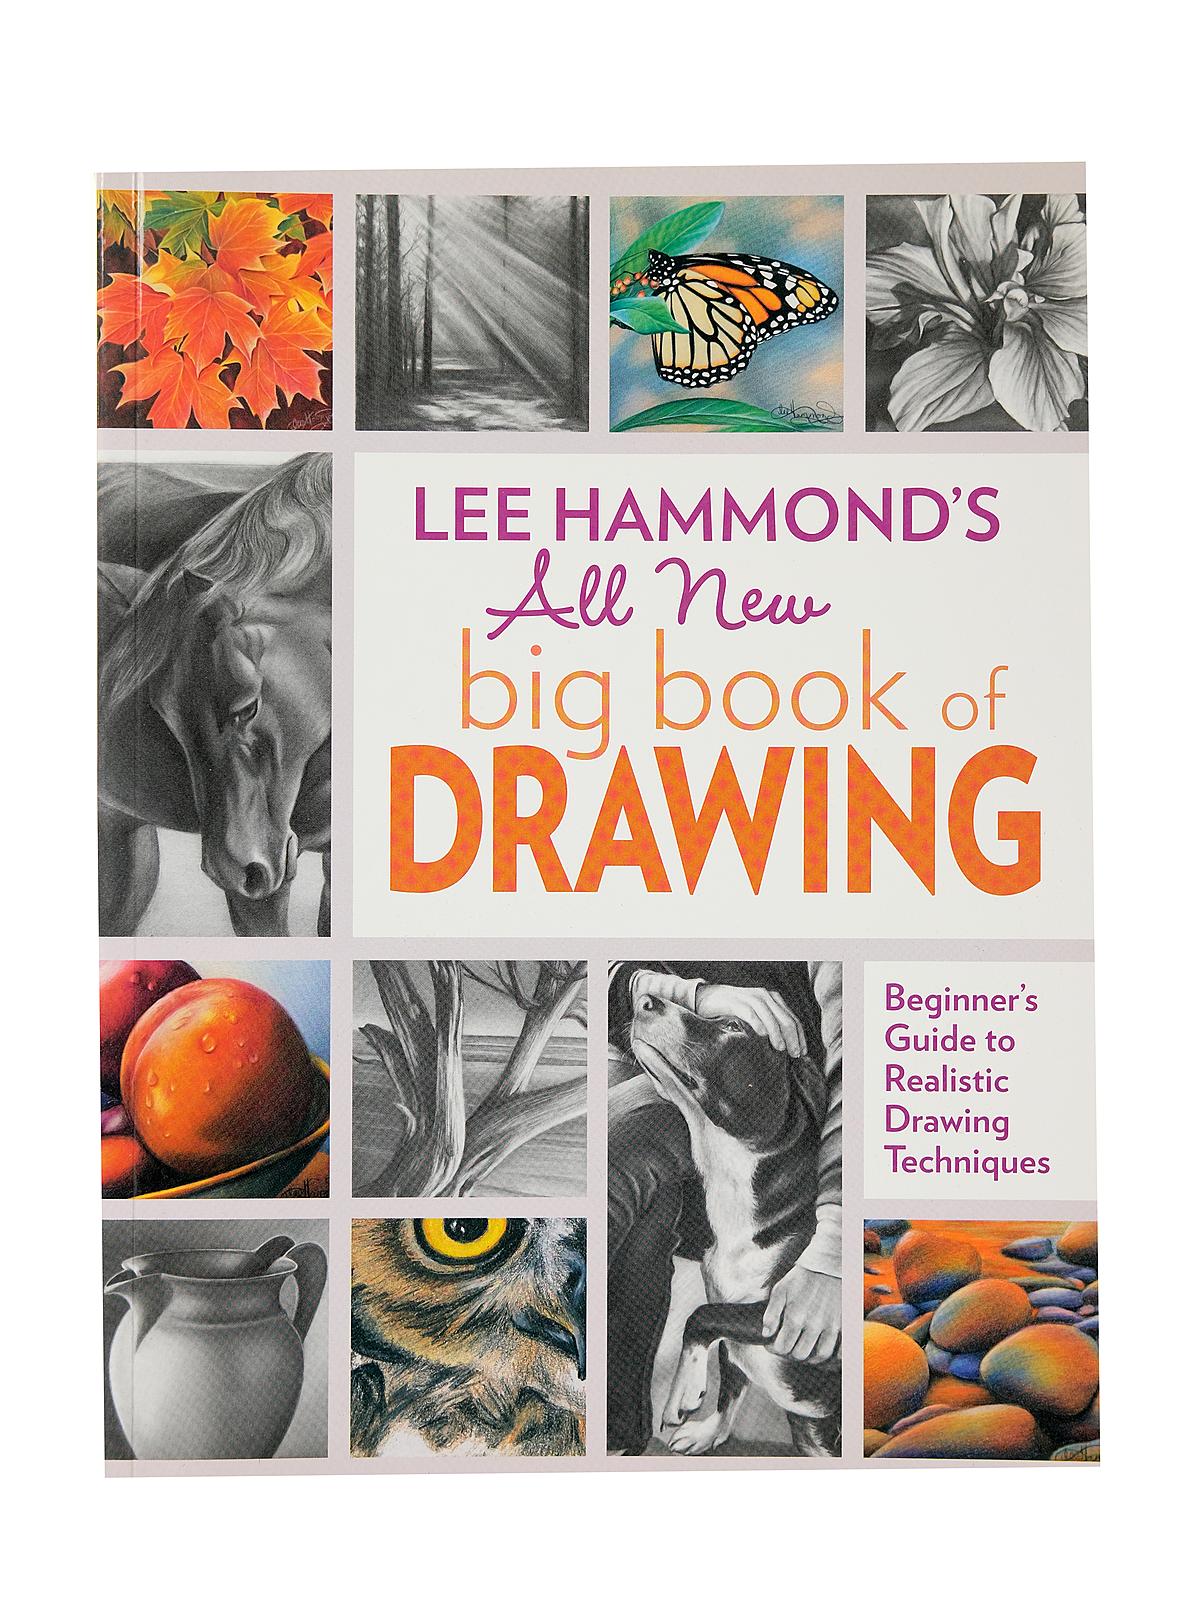 Lee Hammond